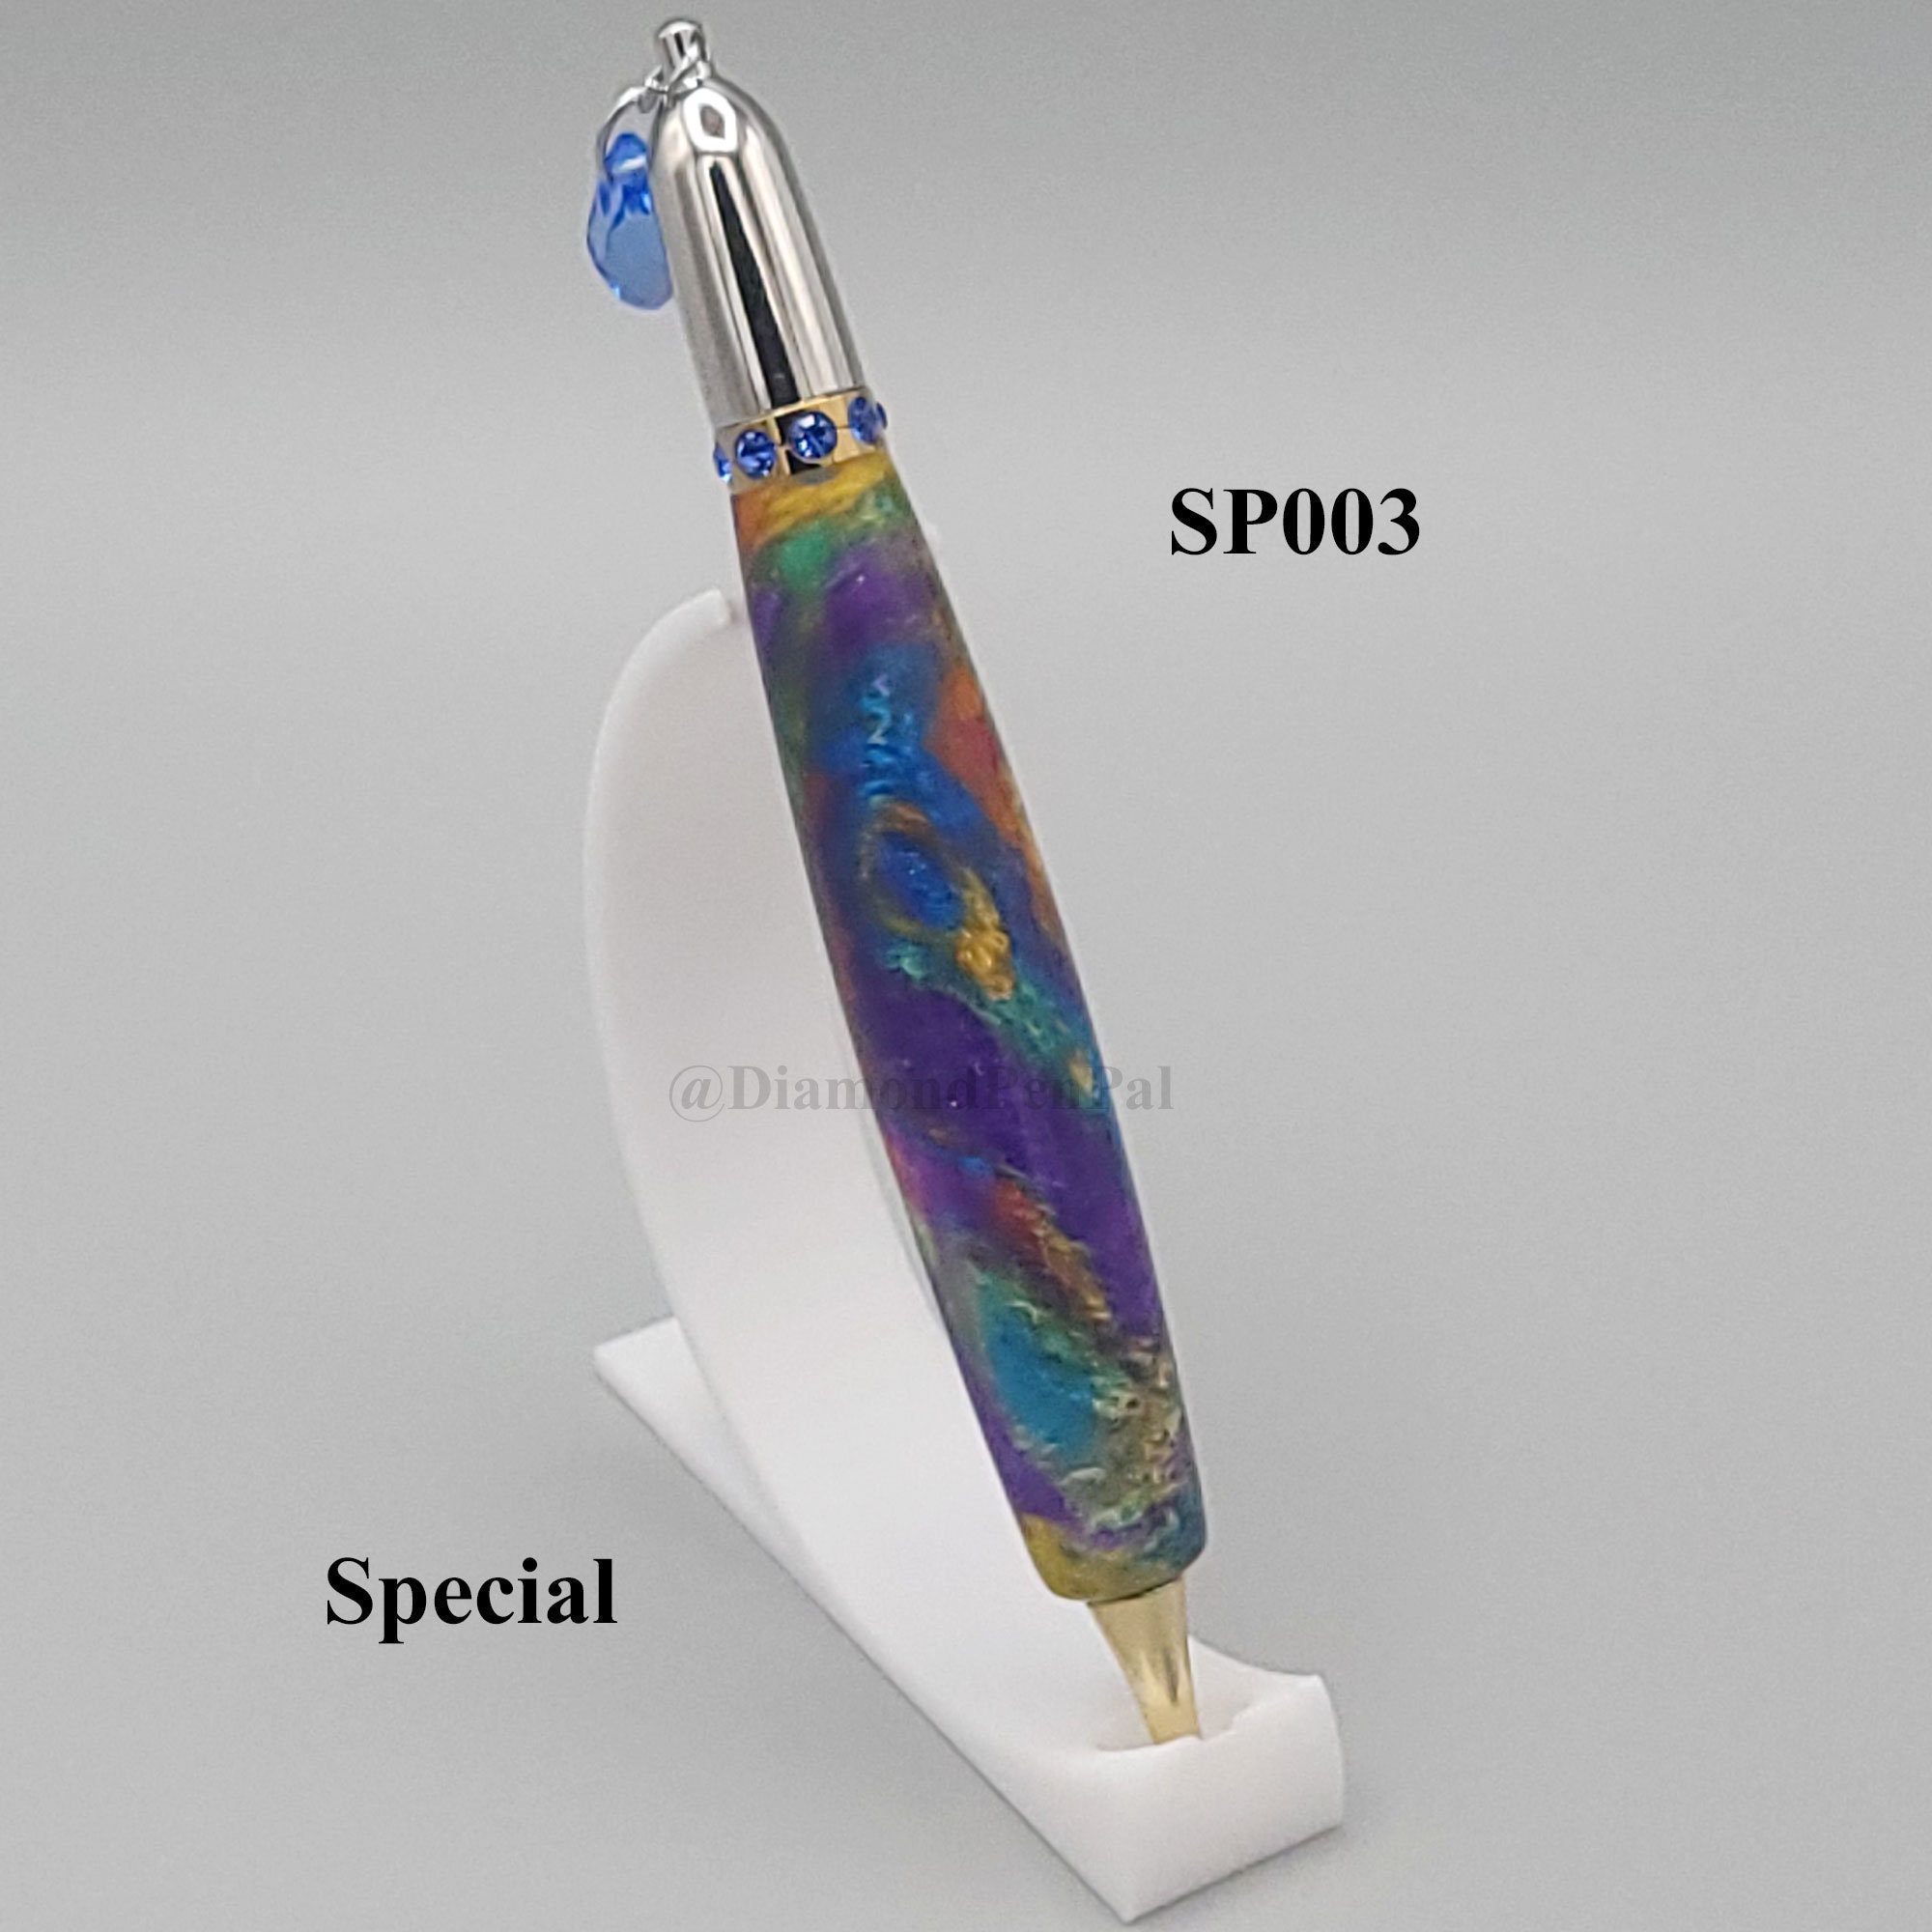 DiamondDrillsUSA - Roller Head Tool Diamond Painting Pen Tip